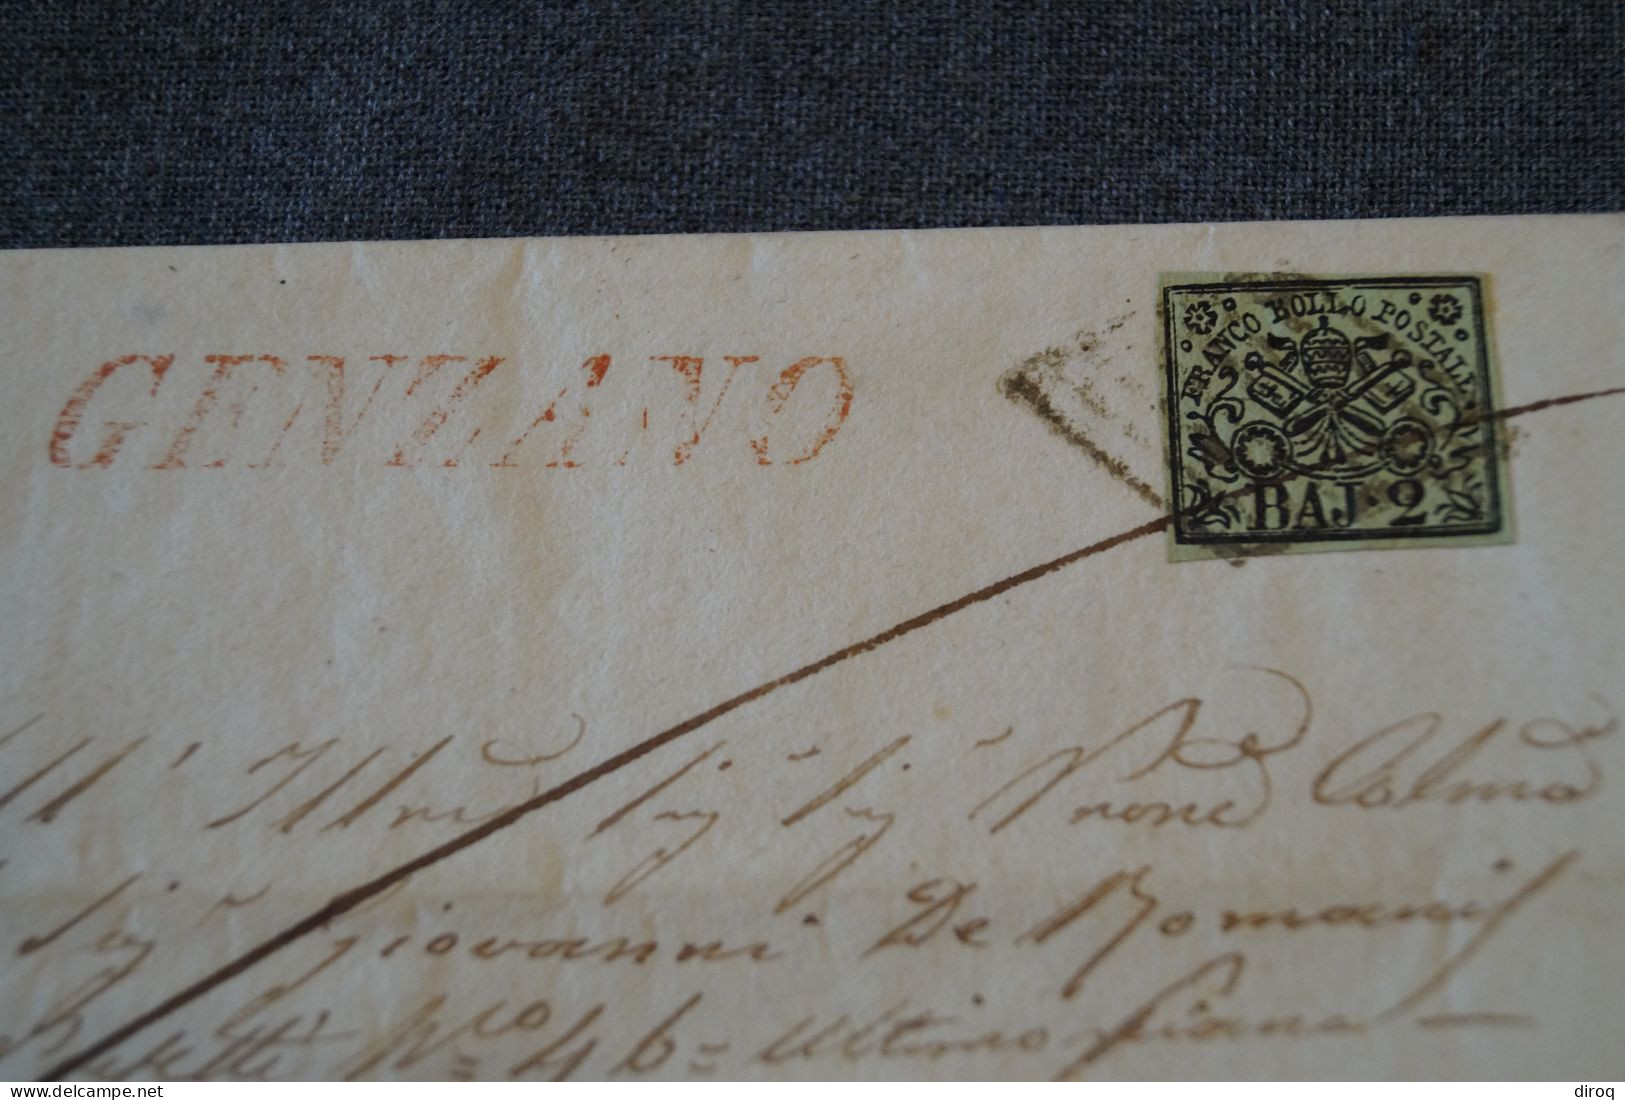 Ancien Envoi Franco Bollo Postale BAJ-2, Italia 1857,courrier à Identifier,pour Collection - Kirchenstaaten